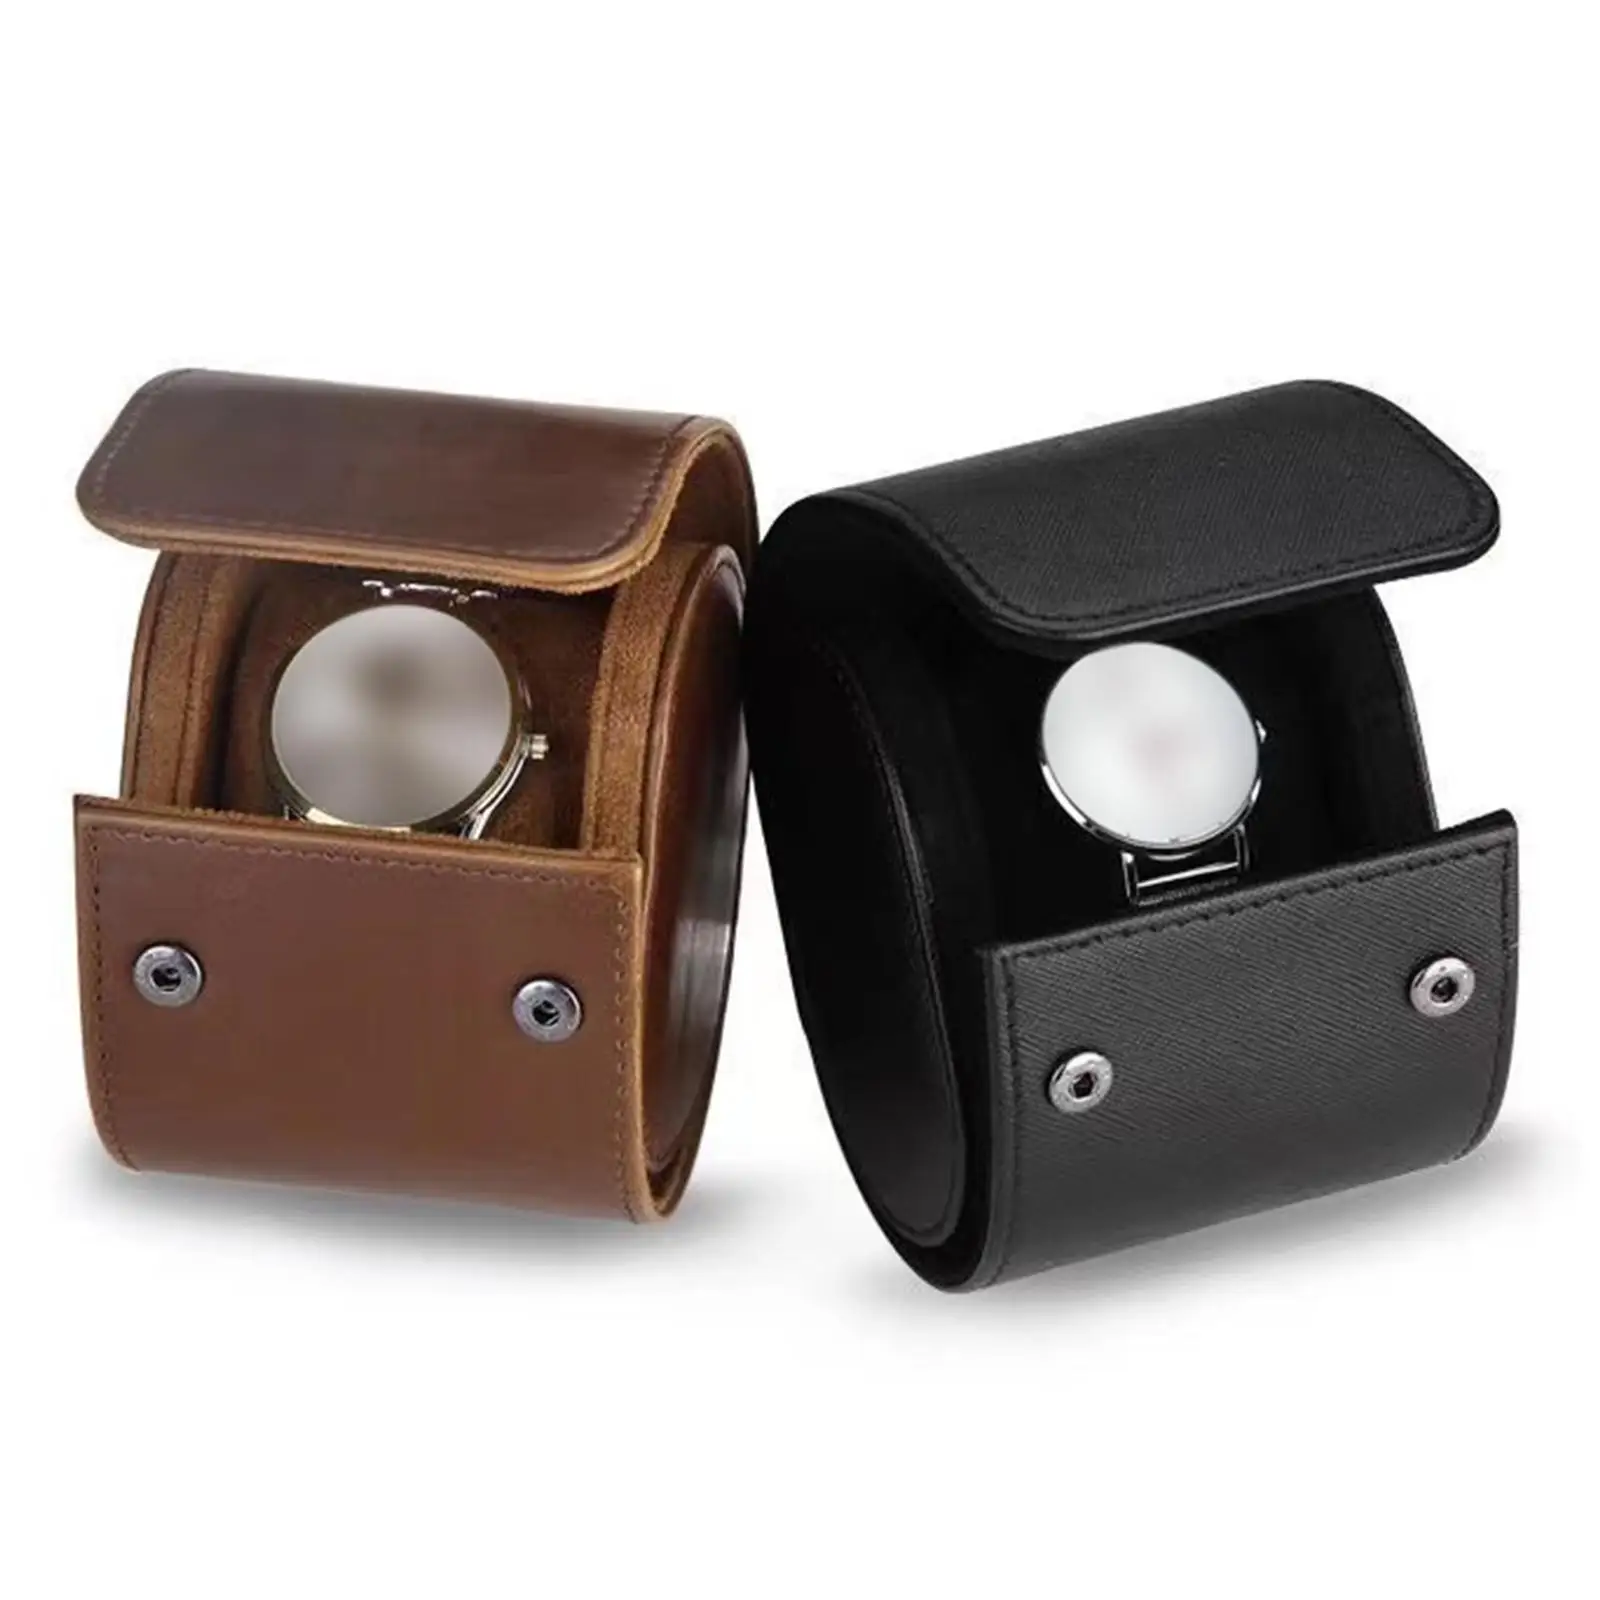 Single Watch Roll Travel Case Men Women Gift Bracelet Storage Organizer